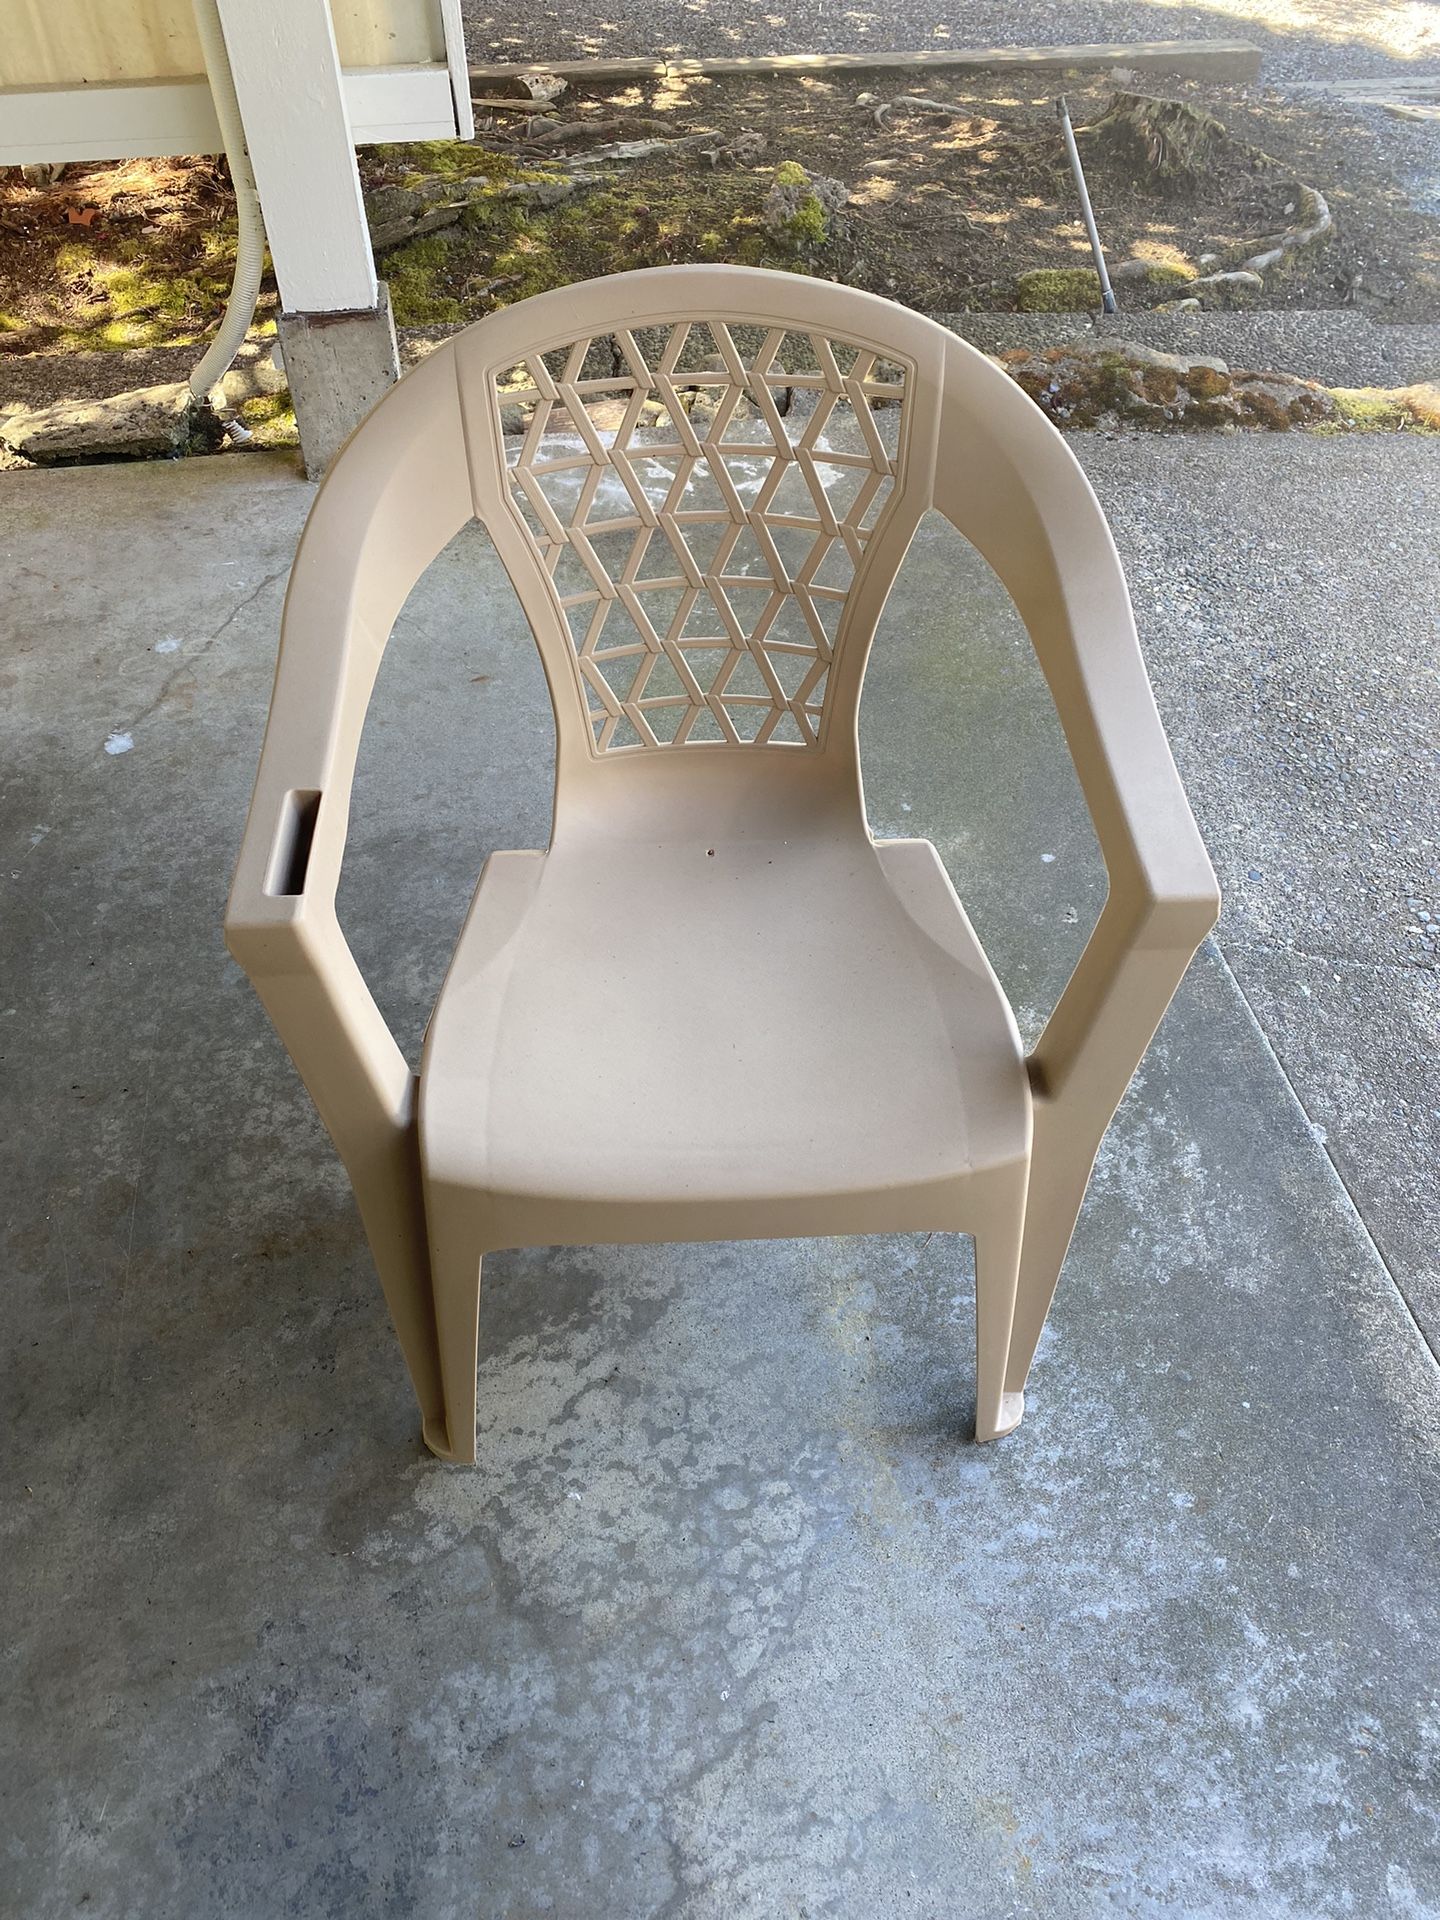 Free Plastic Chair